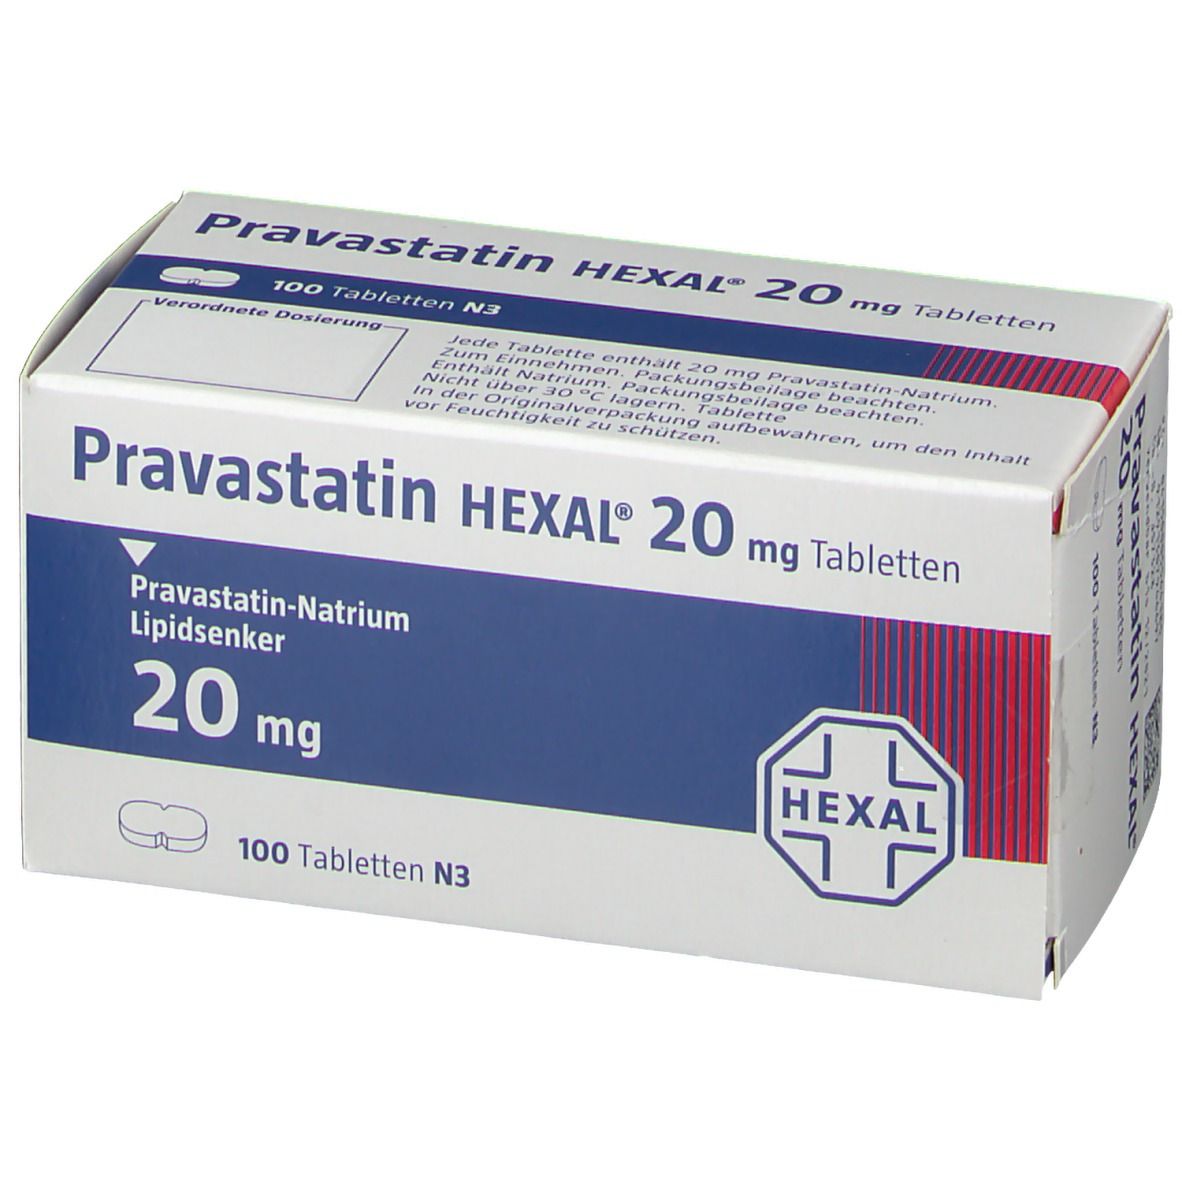 Pravastatin HEXAL® 20 mg